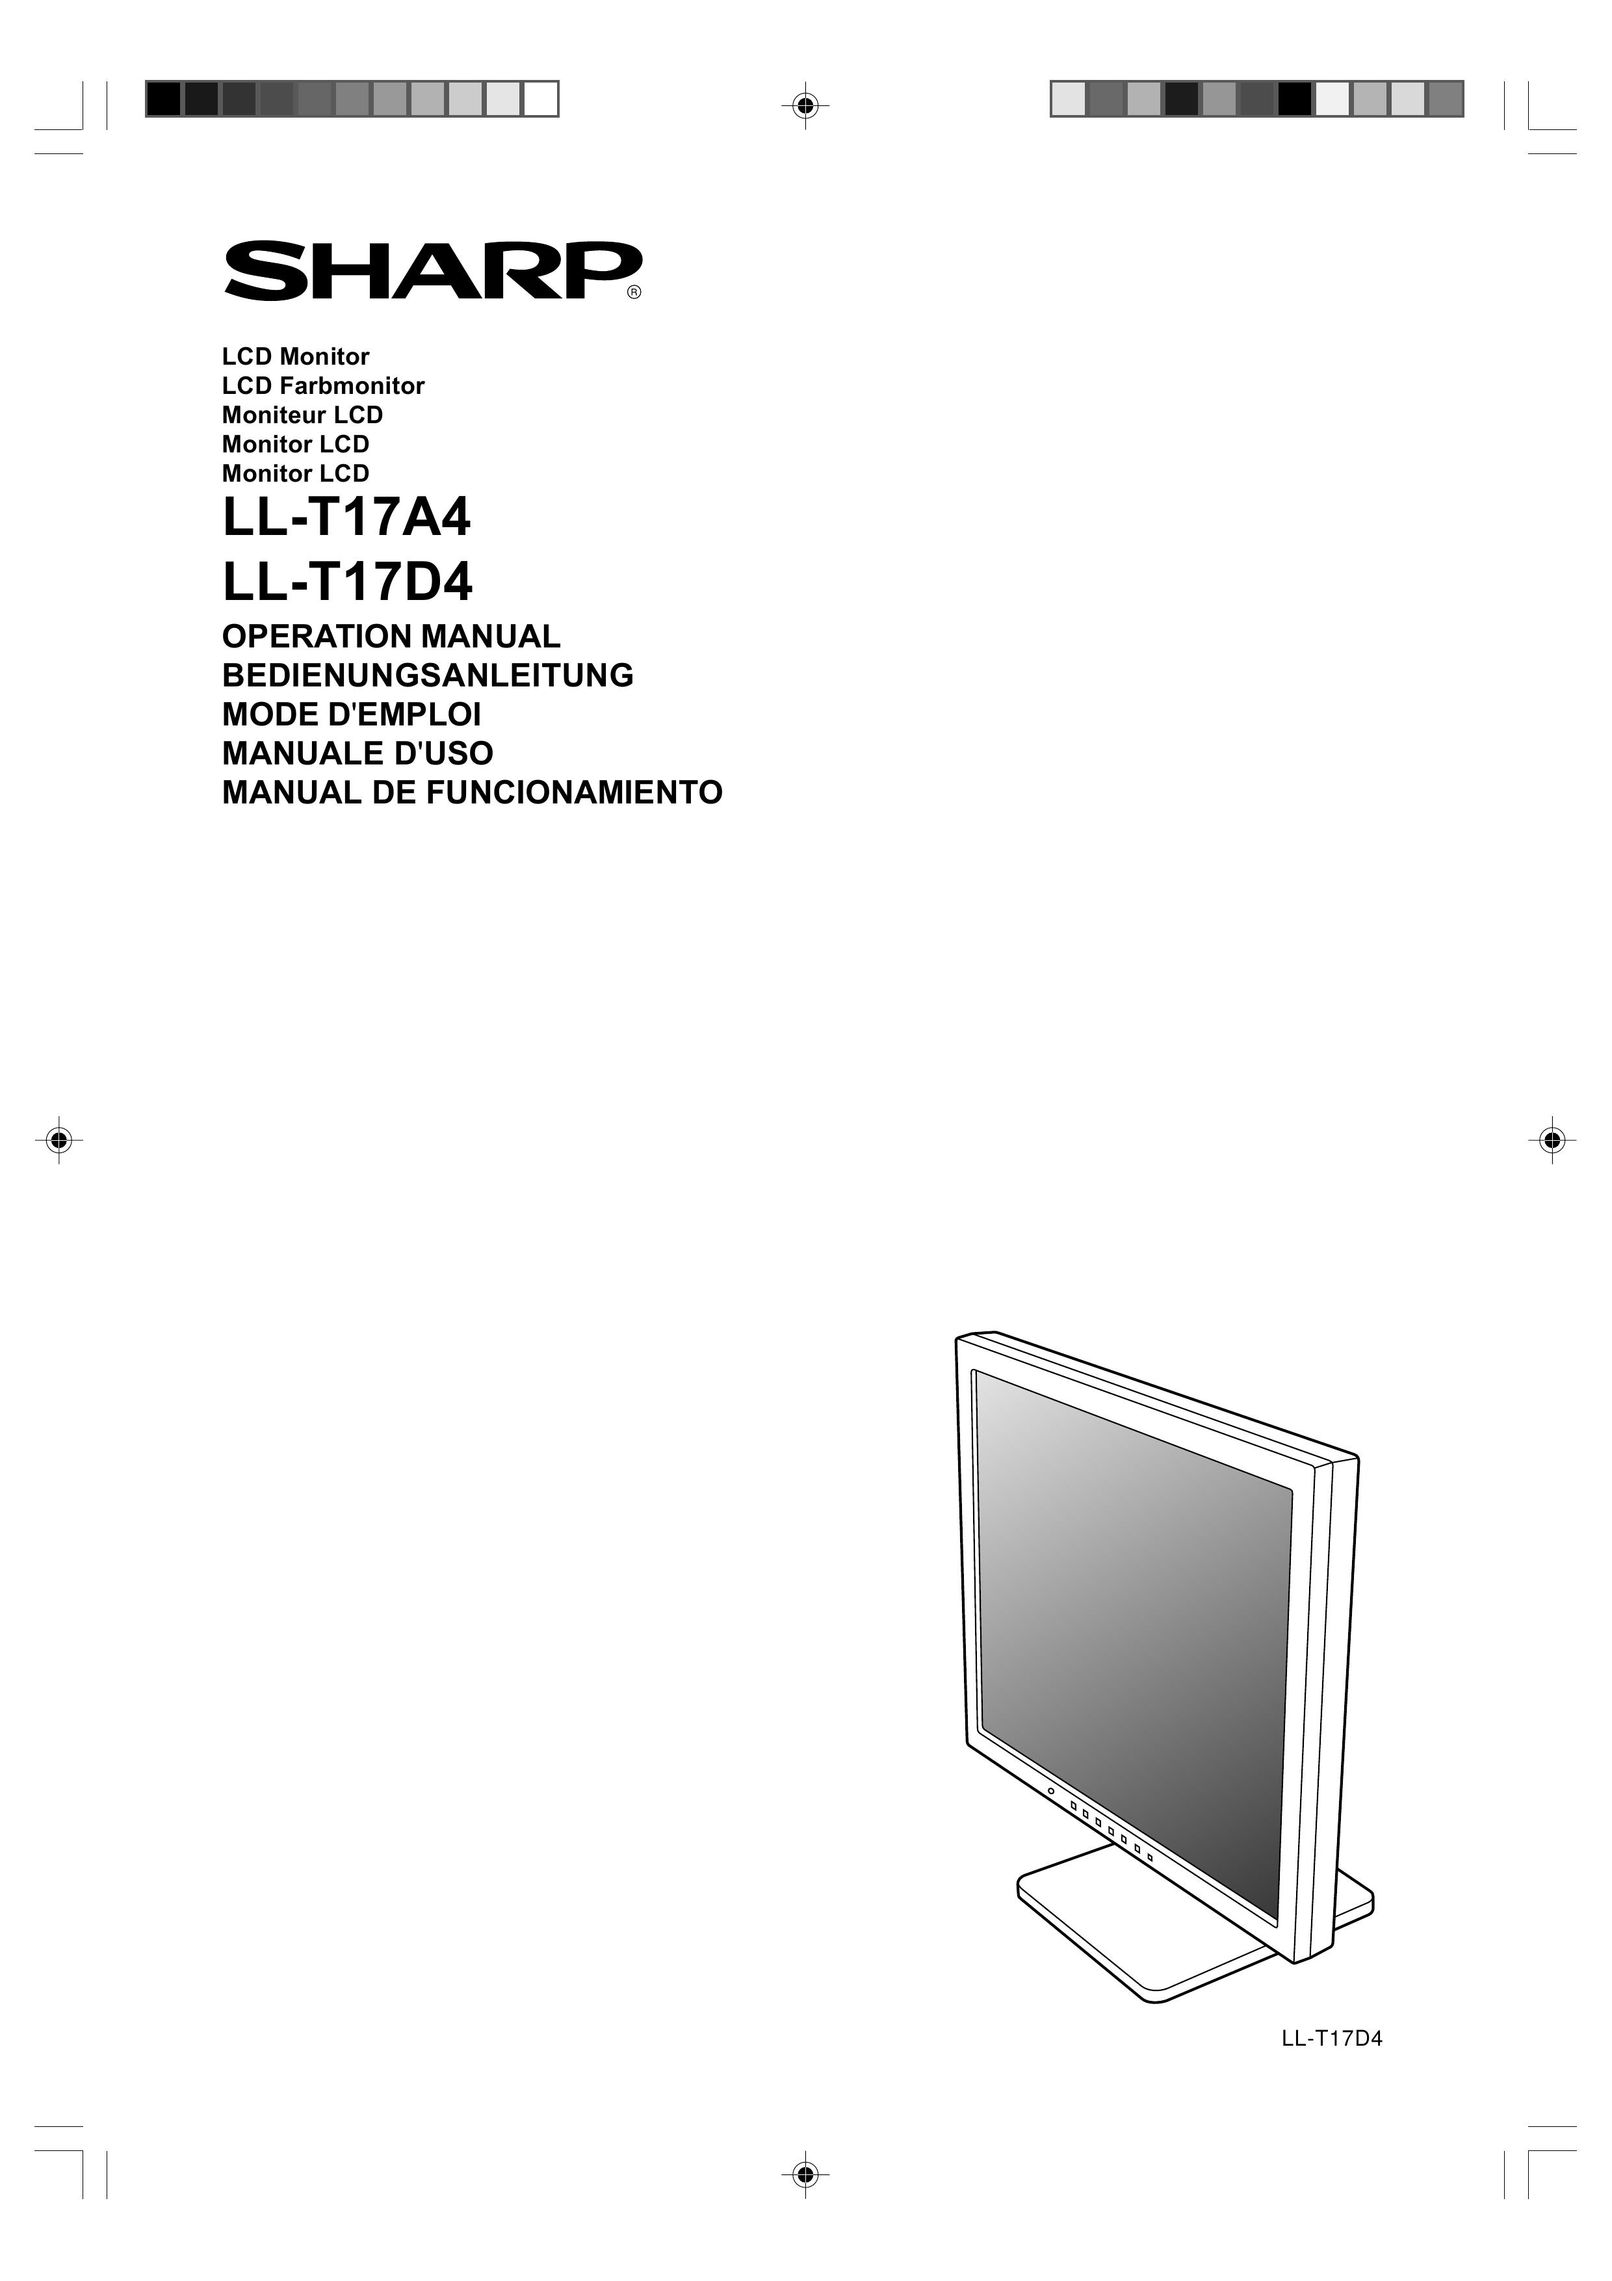 Sharp LL-T17D4 Computer Monitor User Manual